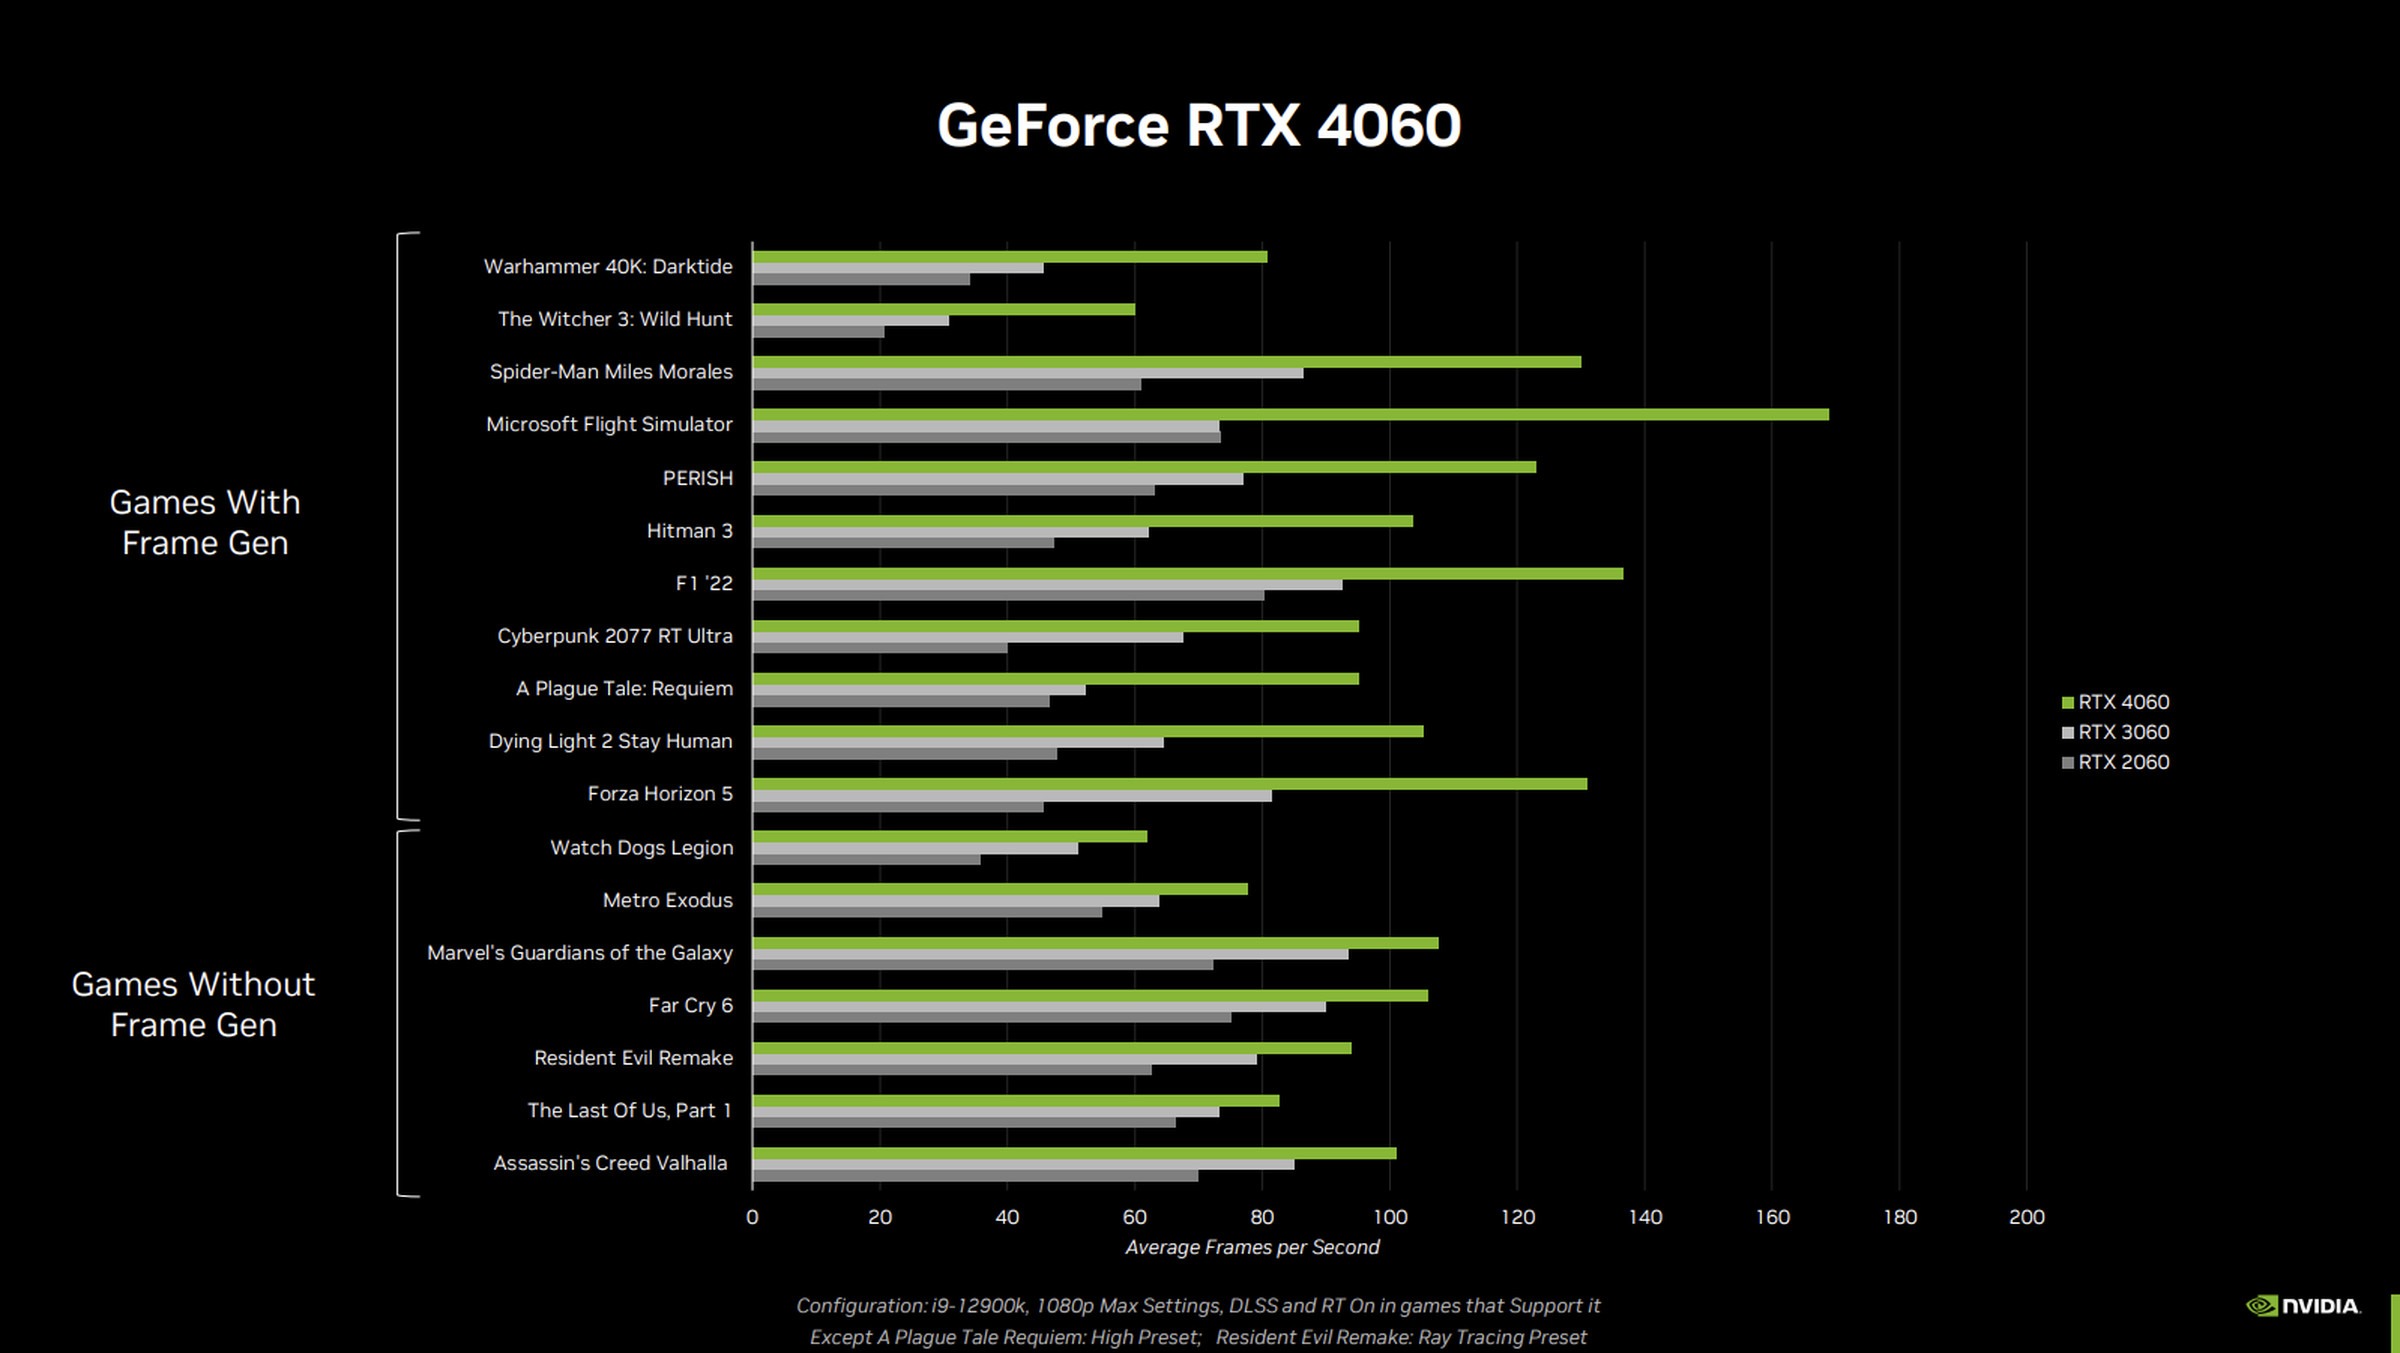 Nvidia RTX 4050 impresses in first benchmark leak